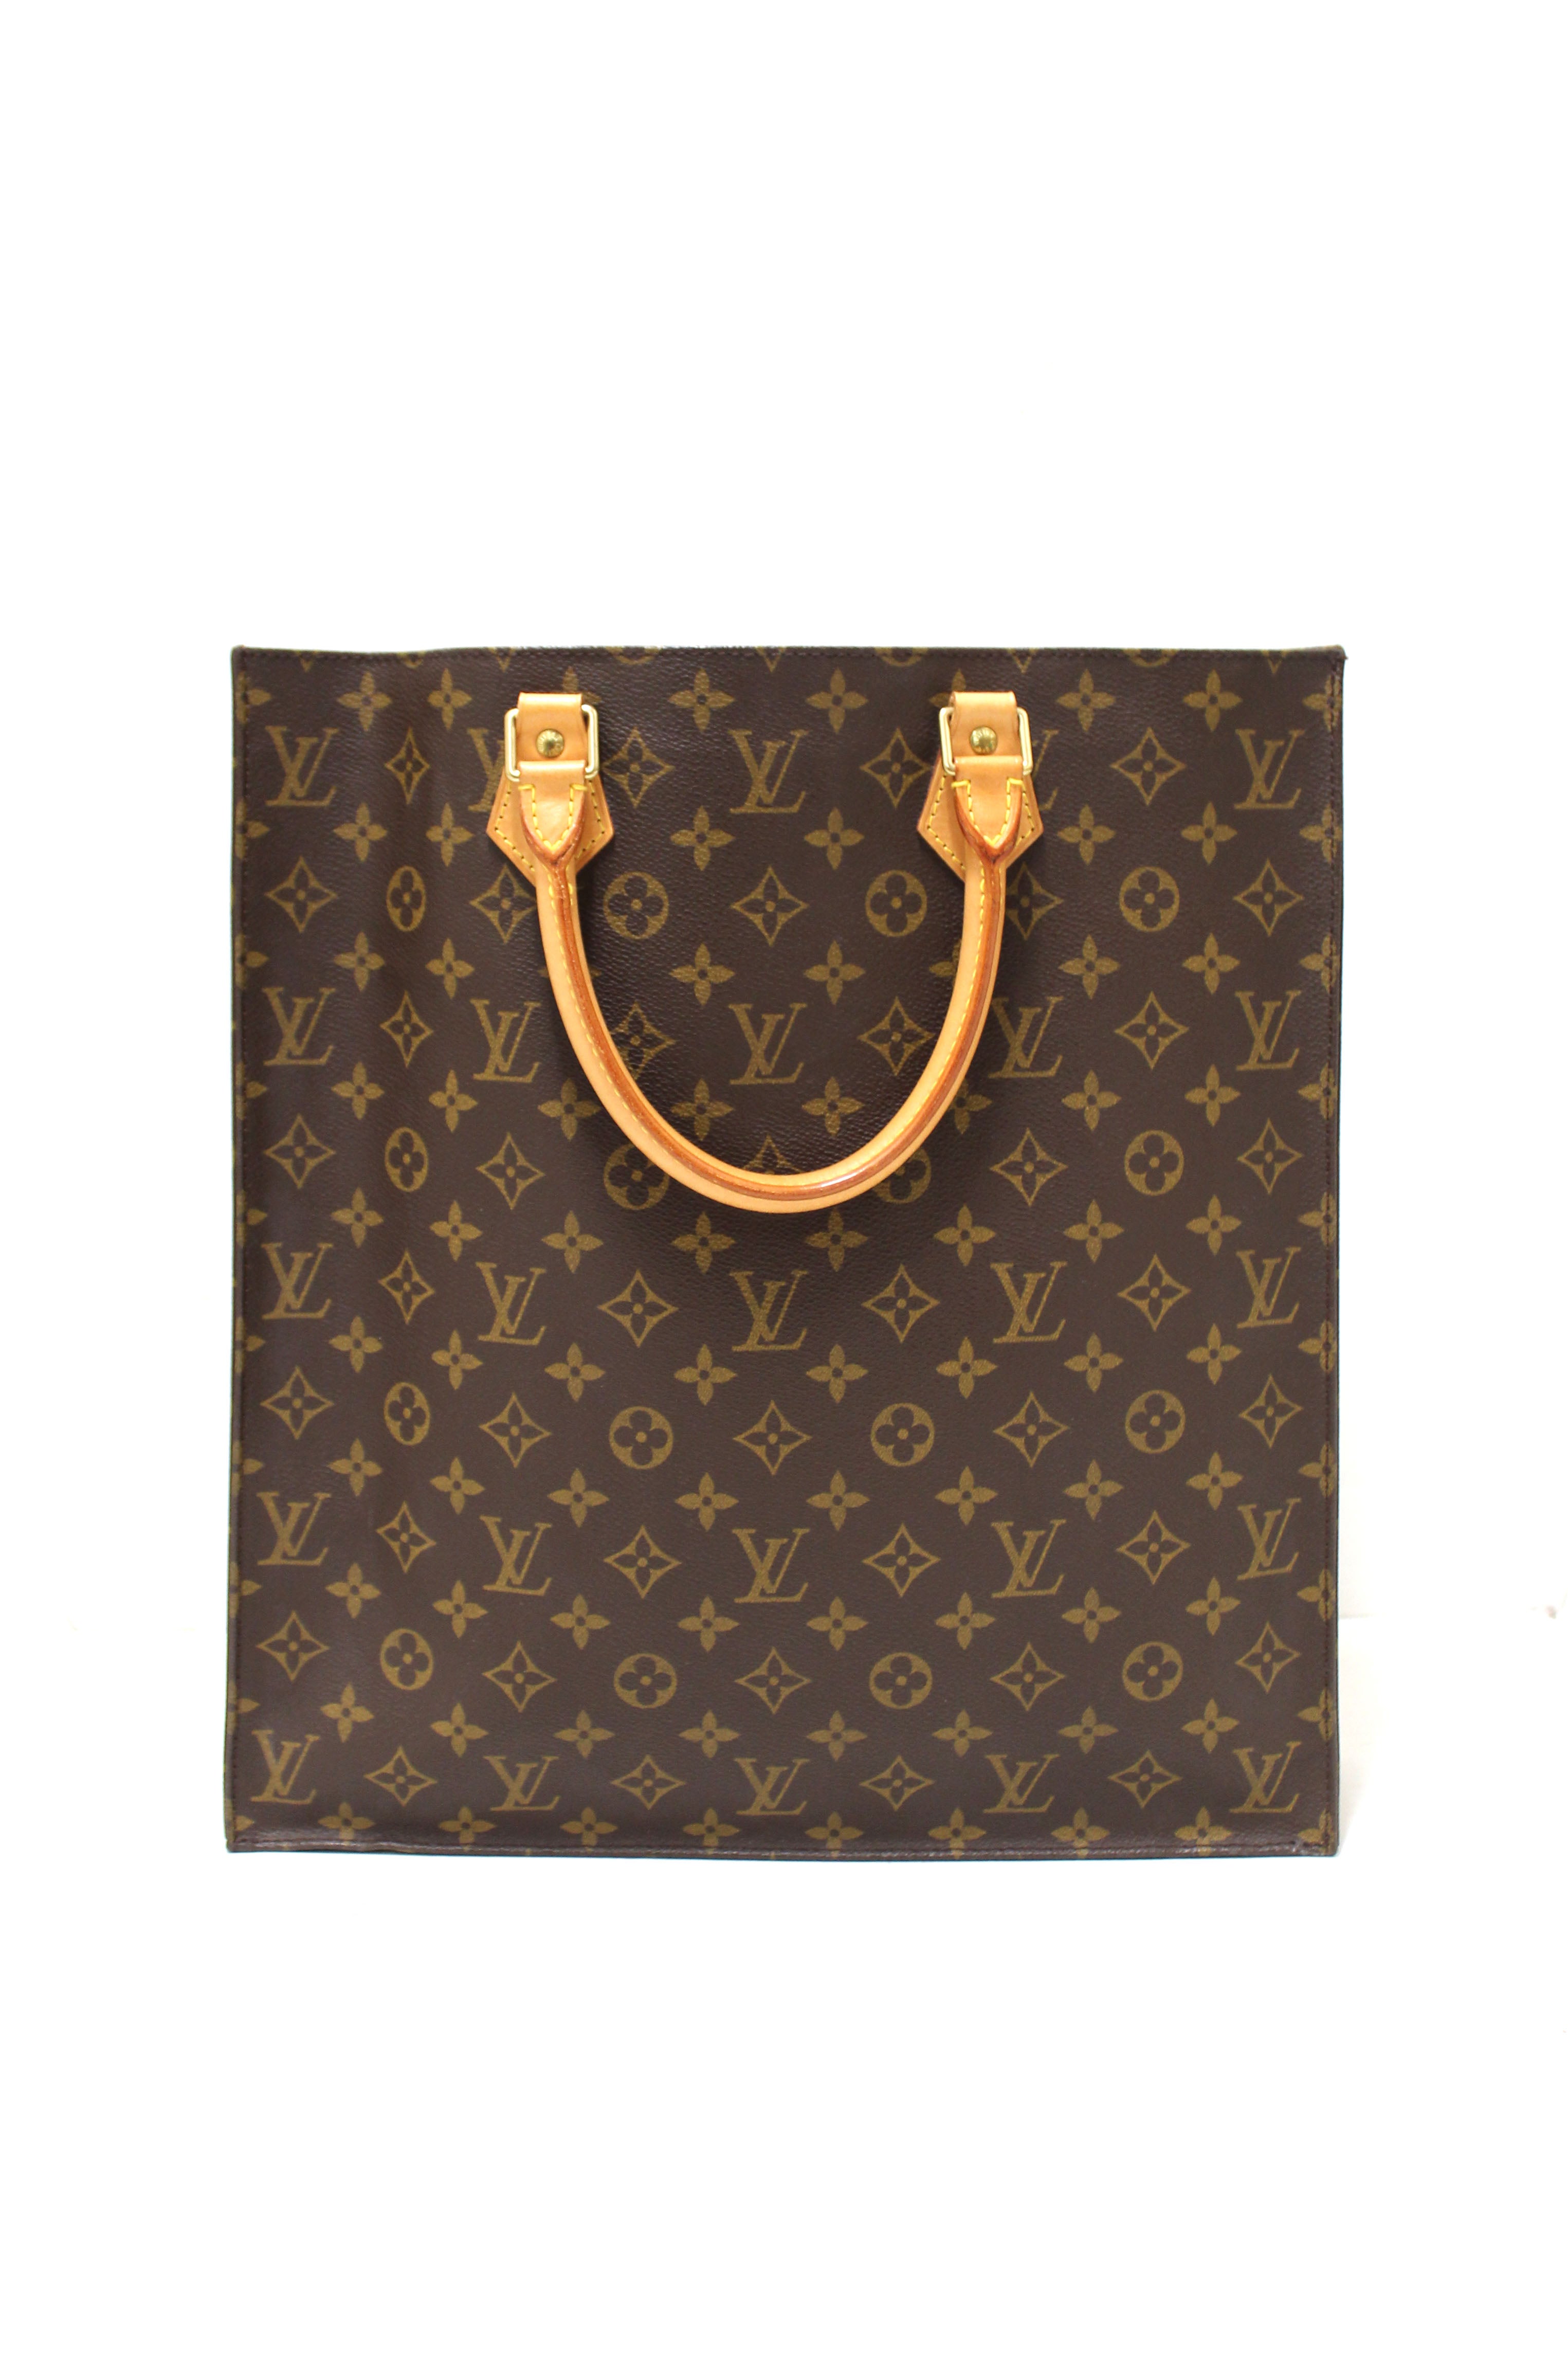 Authentic Louis Vuitton Classic Monogram Sac Plat Handbag